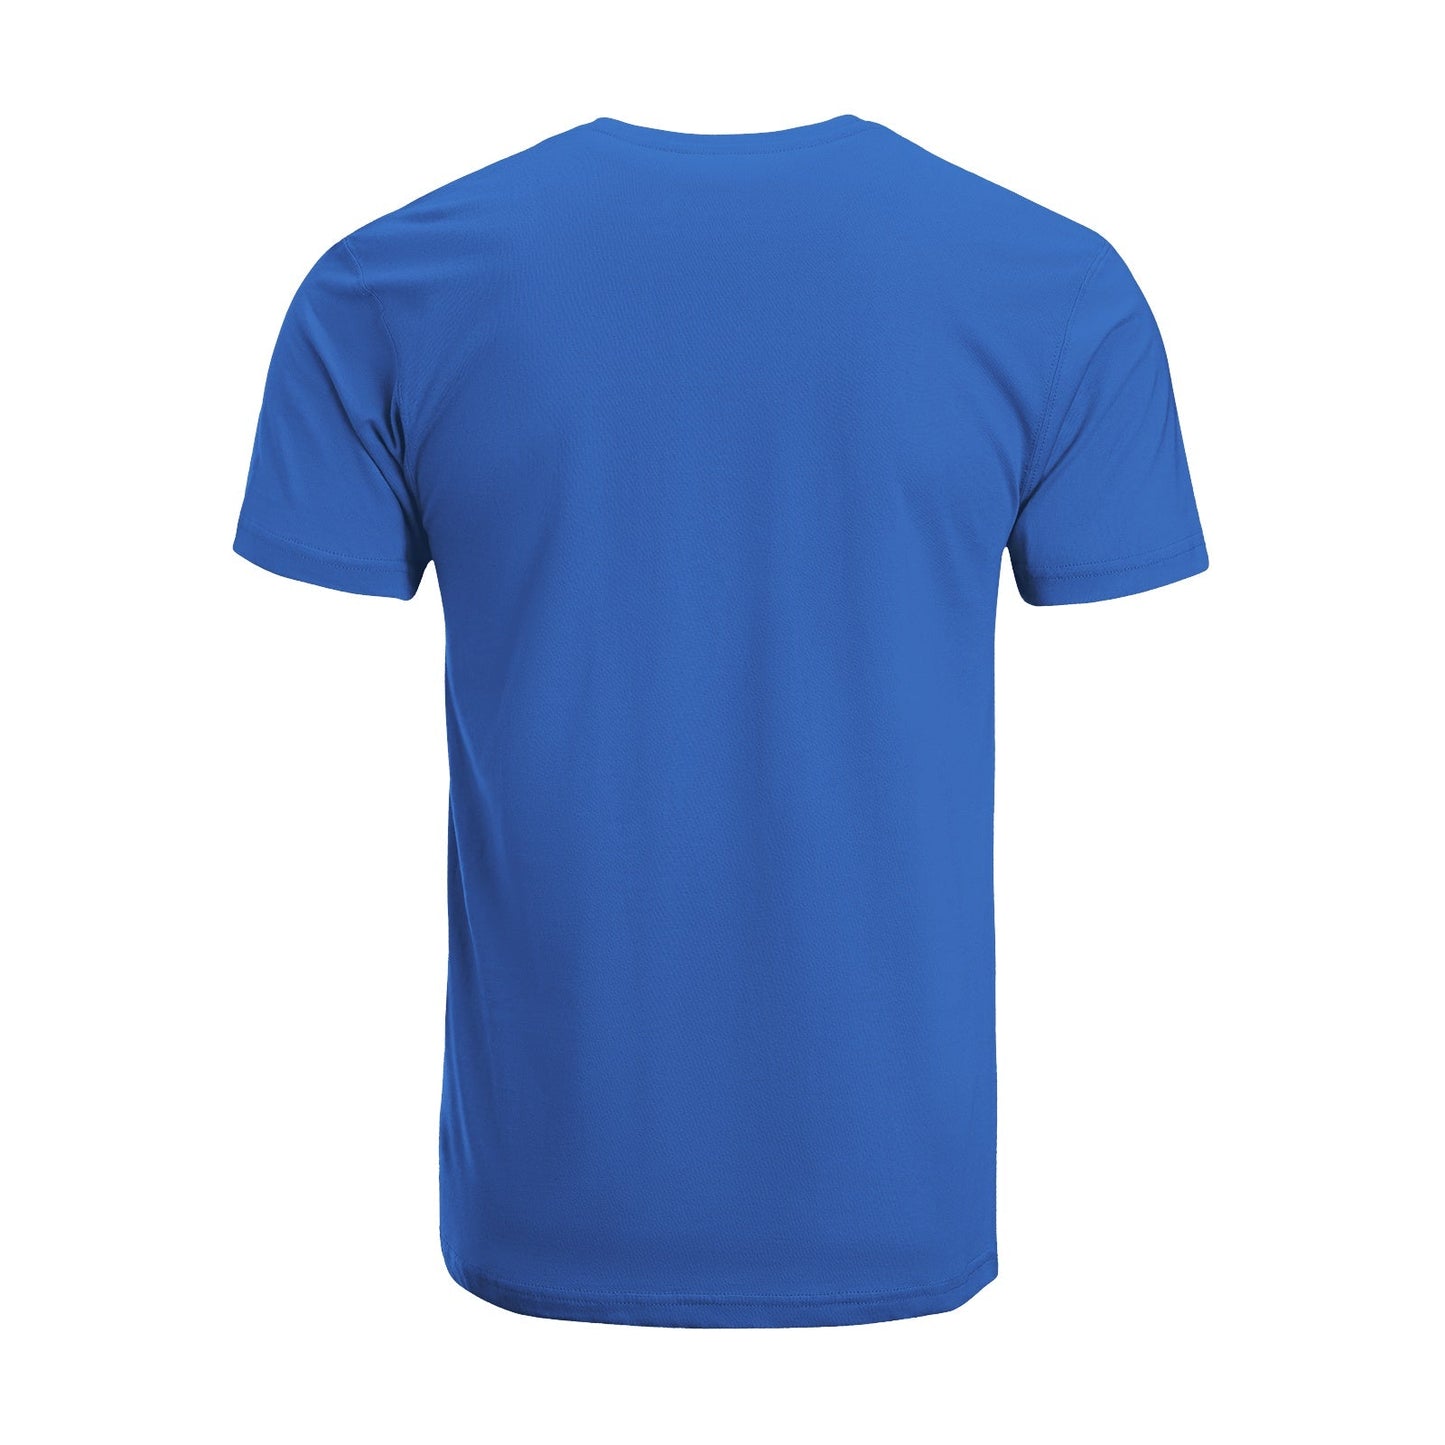 Unisex Short Sleeve Crew Neck Cotton Jersey T-Shirt Gym No. 01 - Tara-Outfits.com